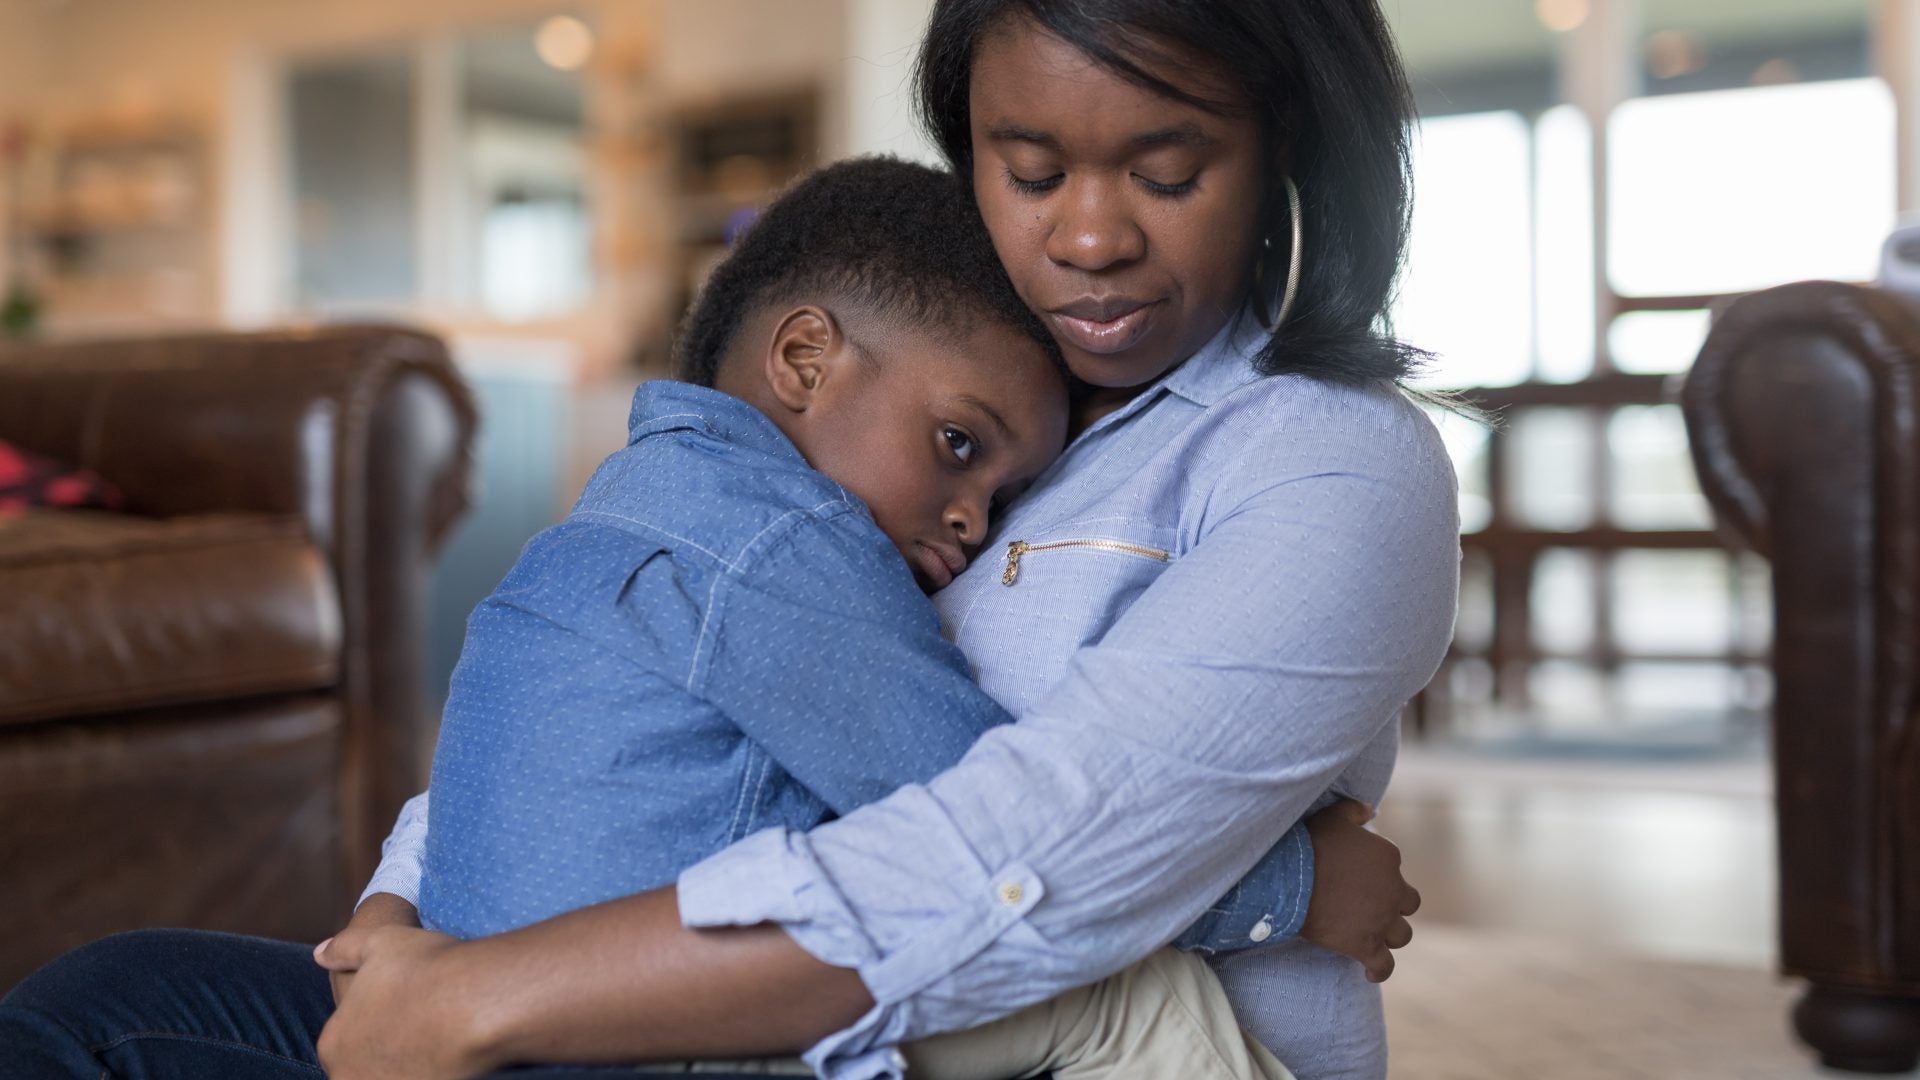 Child Welfare Systems Discriminate Against Black Children